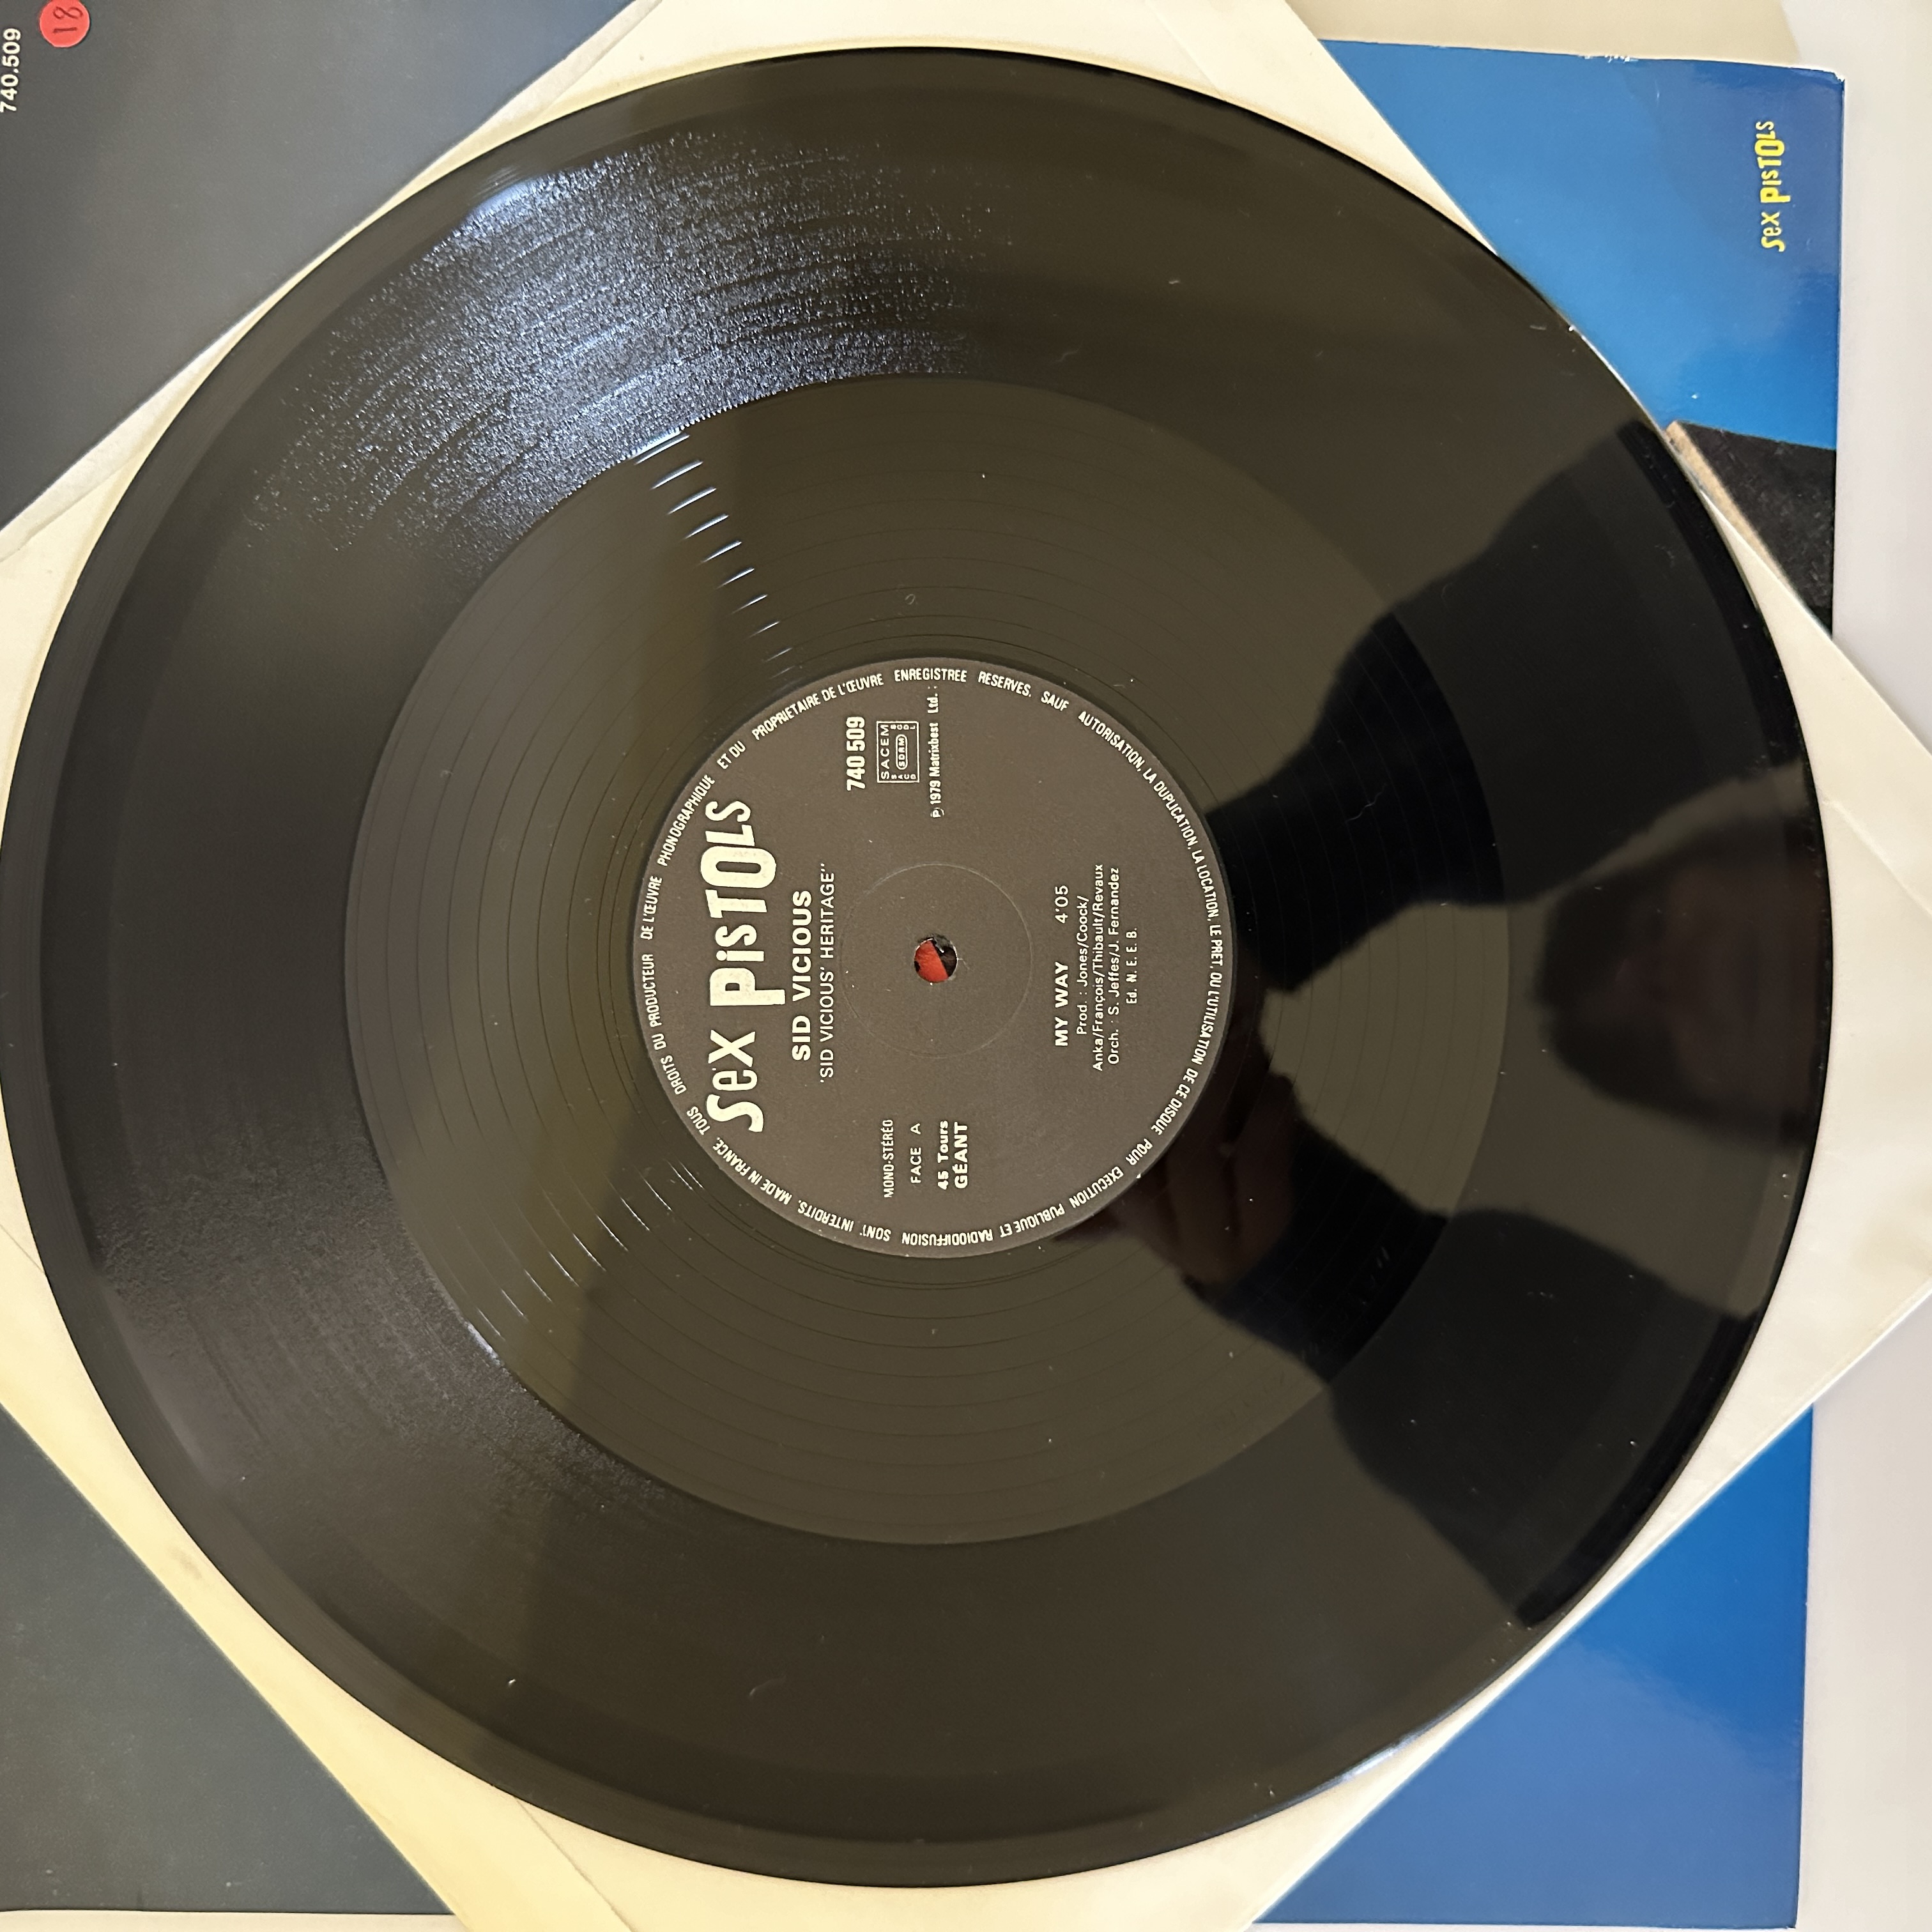 Sid Vicious - C'mon Everybody vinyl LP - Image 6 of 8